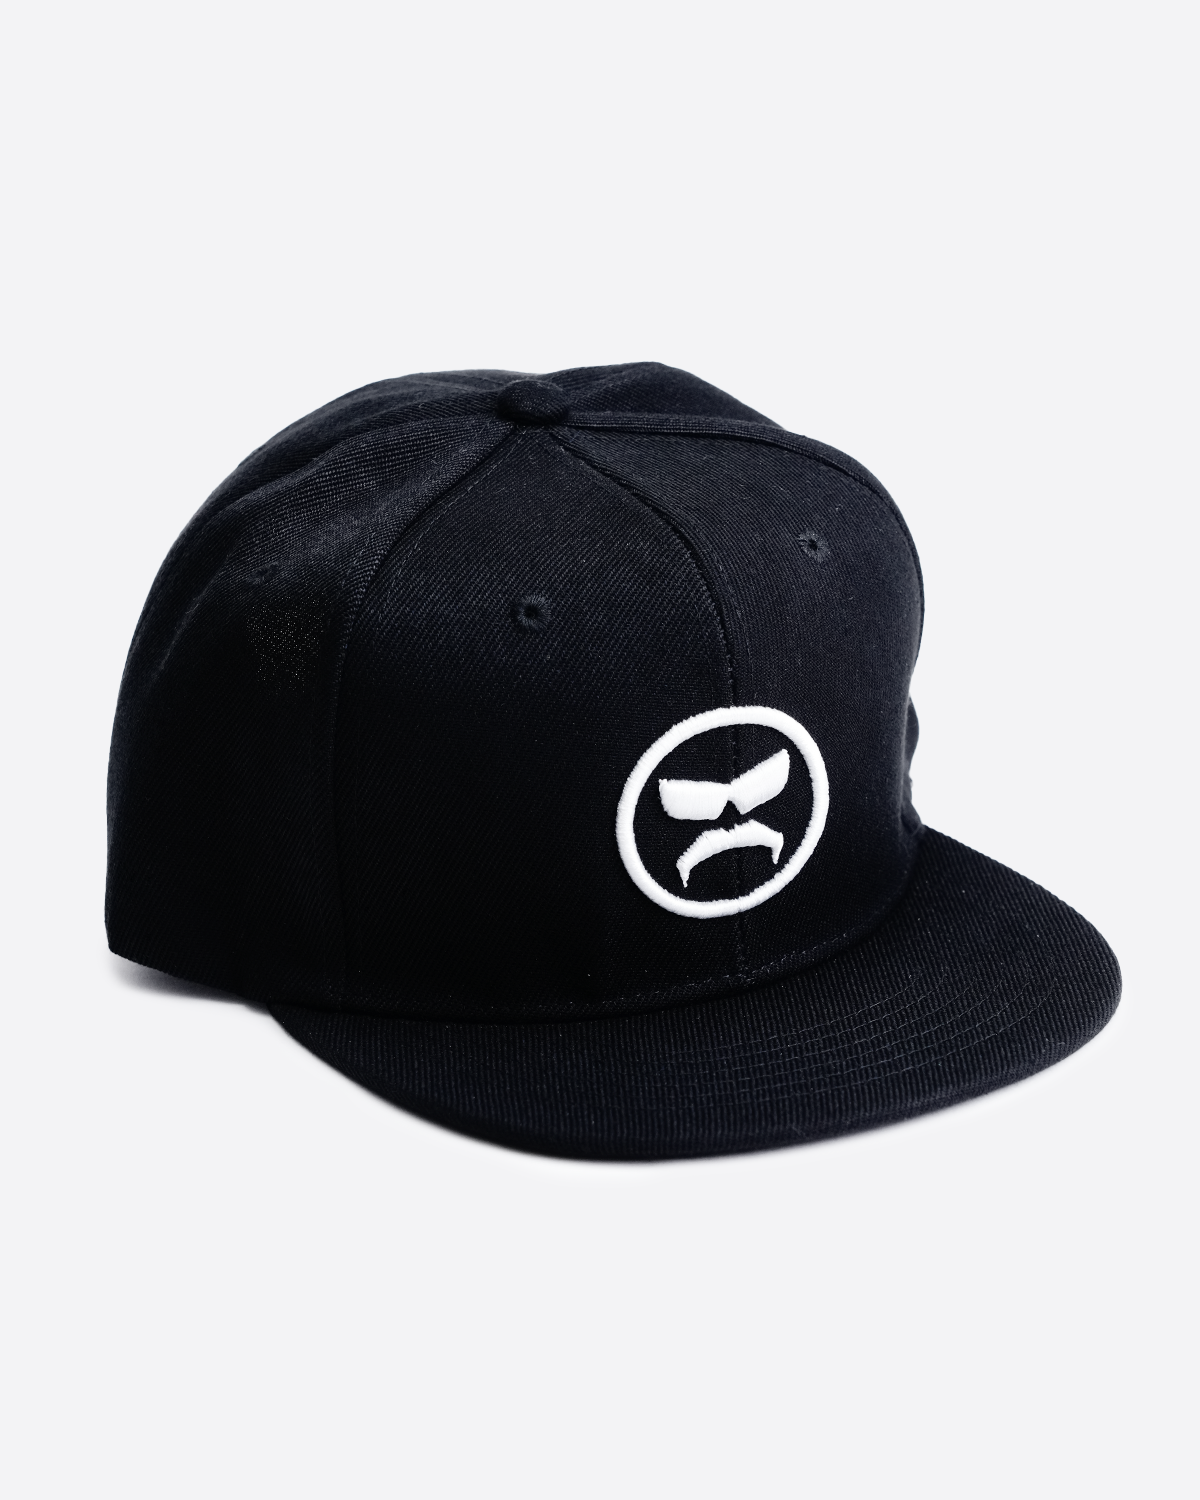 Dominance Snapback Hat